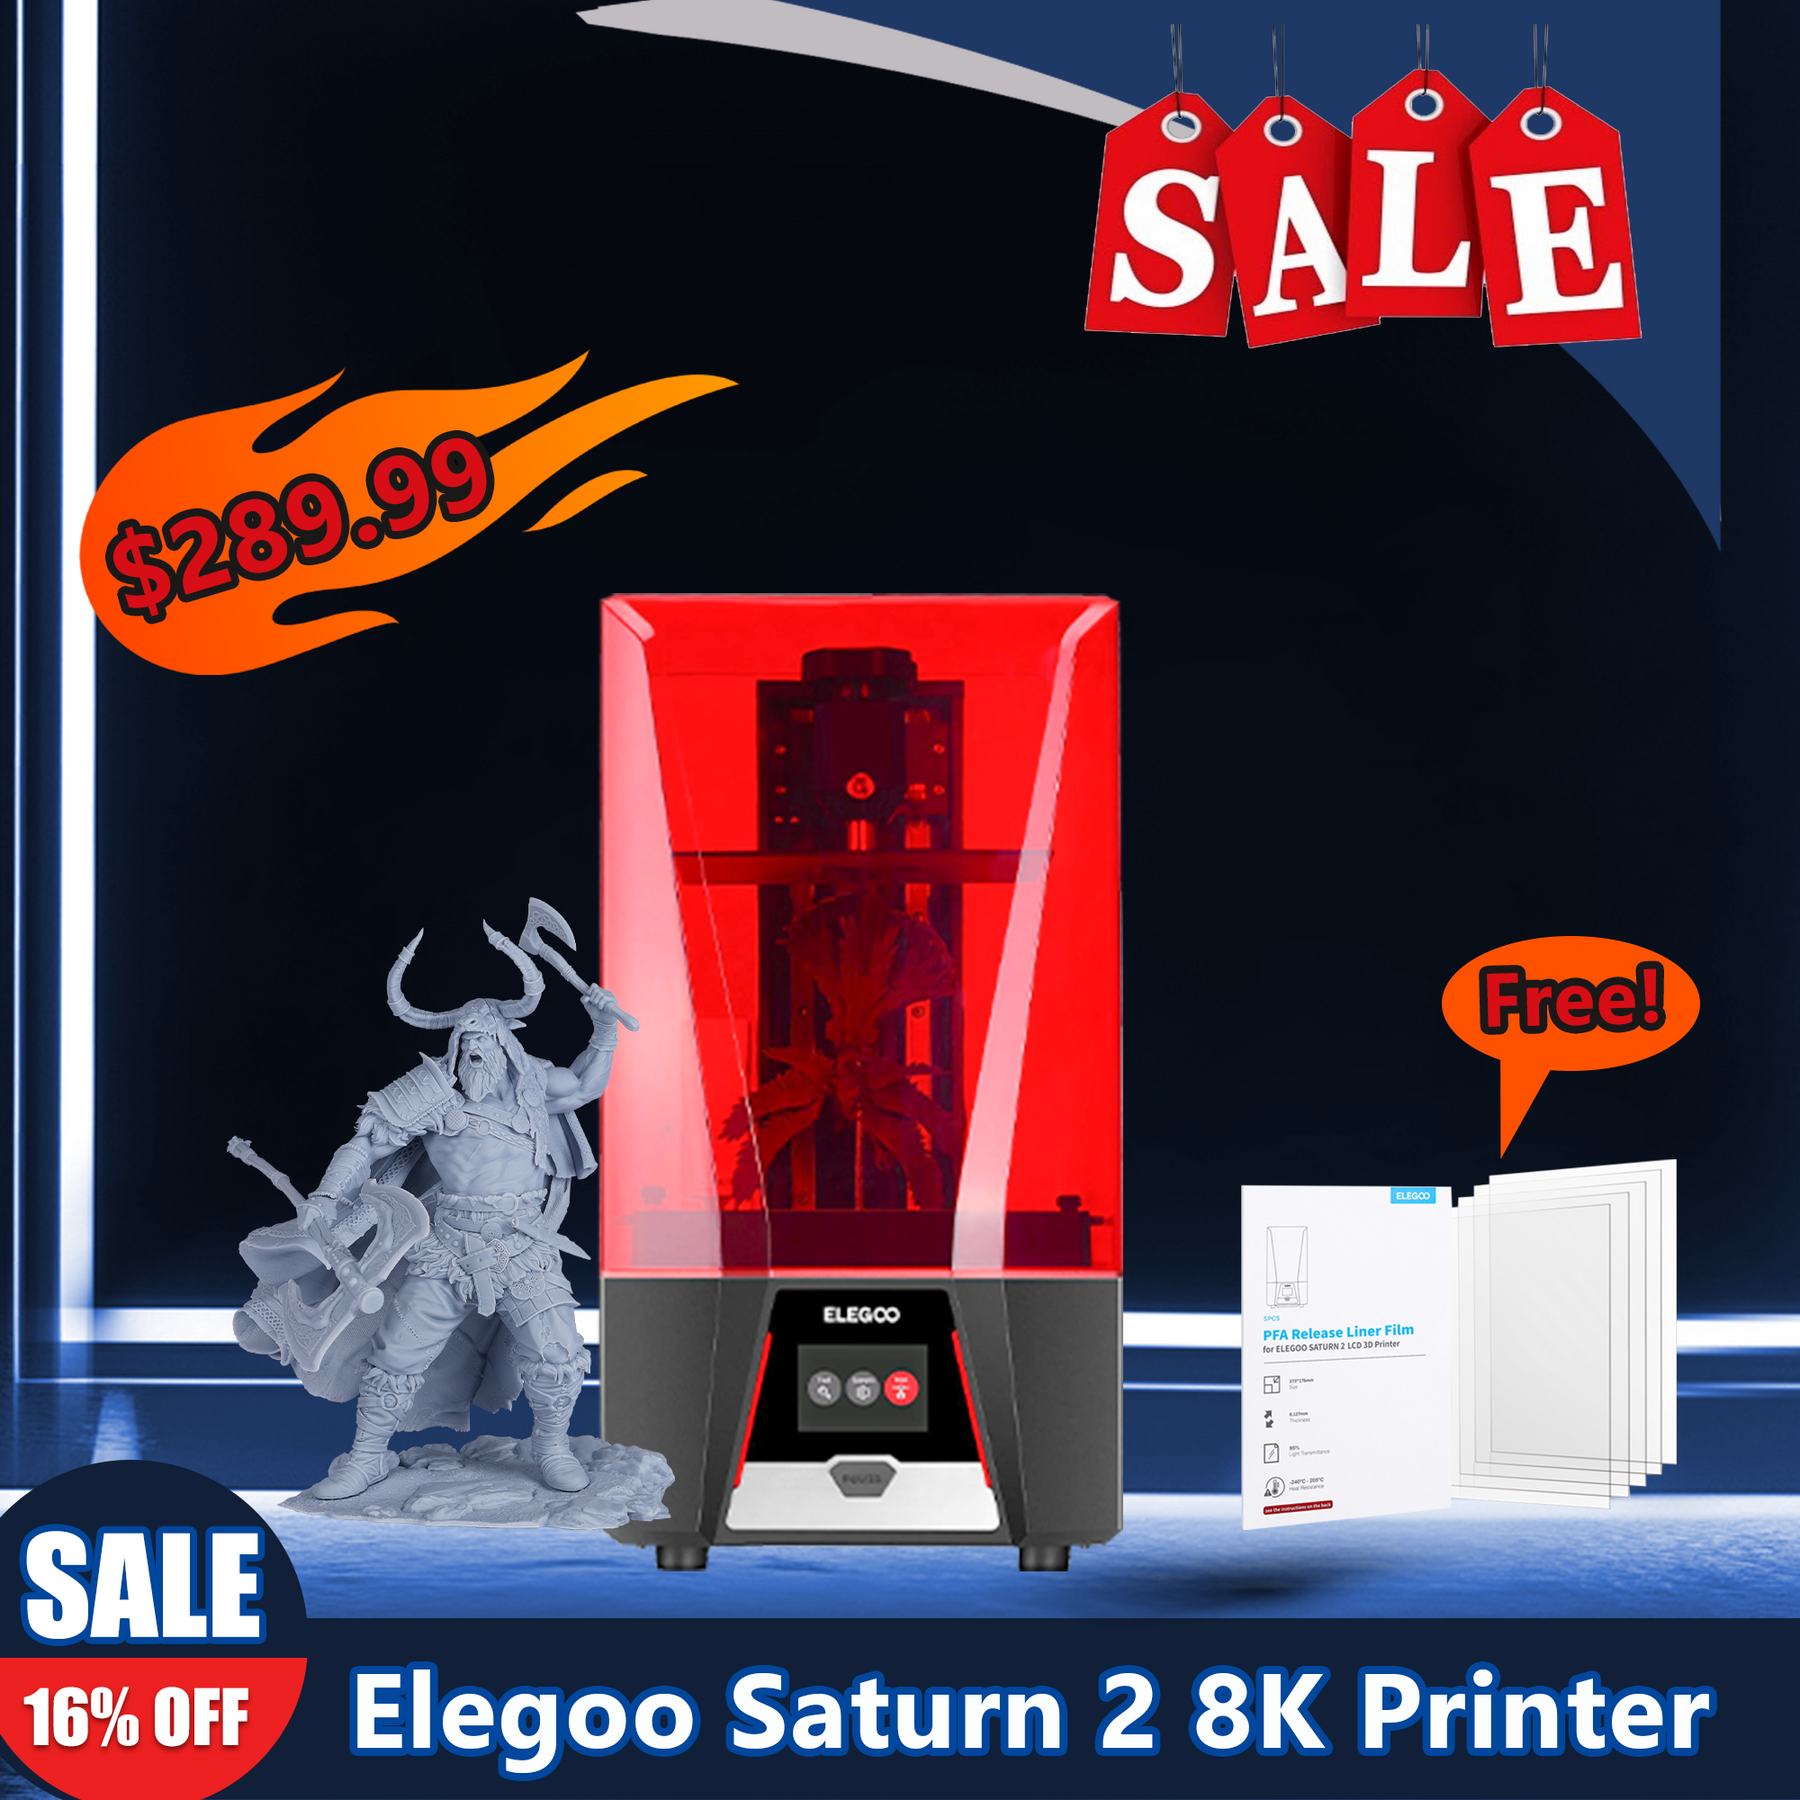 Elegoo Saturn 2 8K Resin 3D Printer - CRAZY DETAILS! 